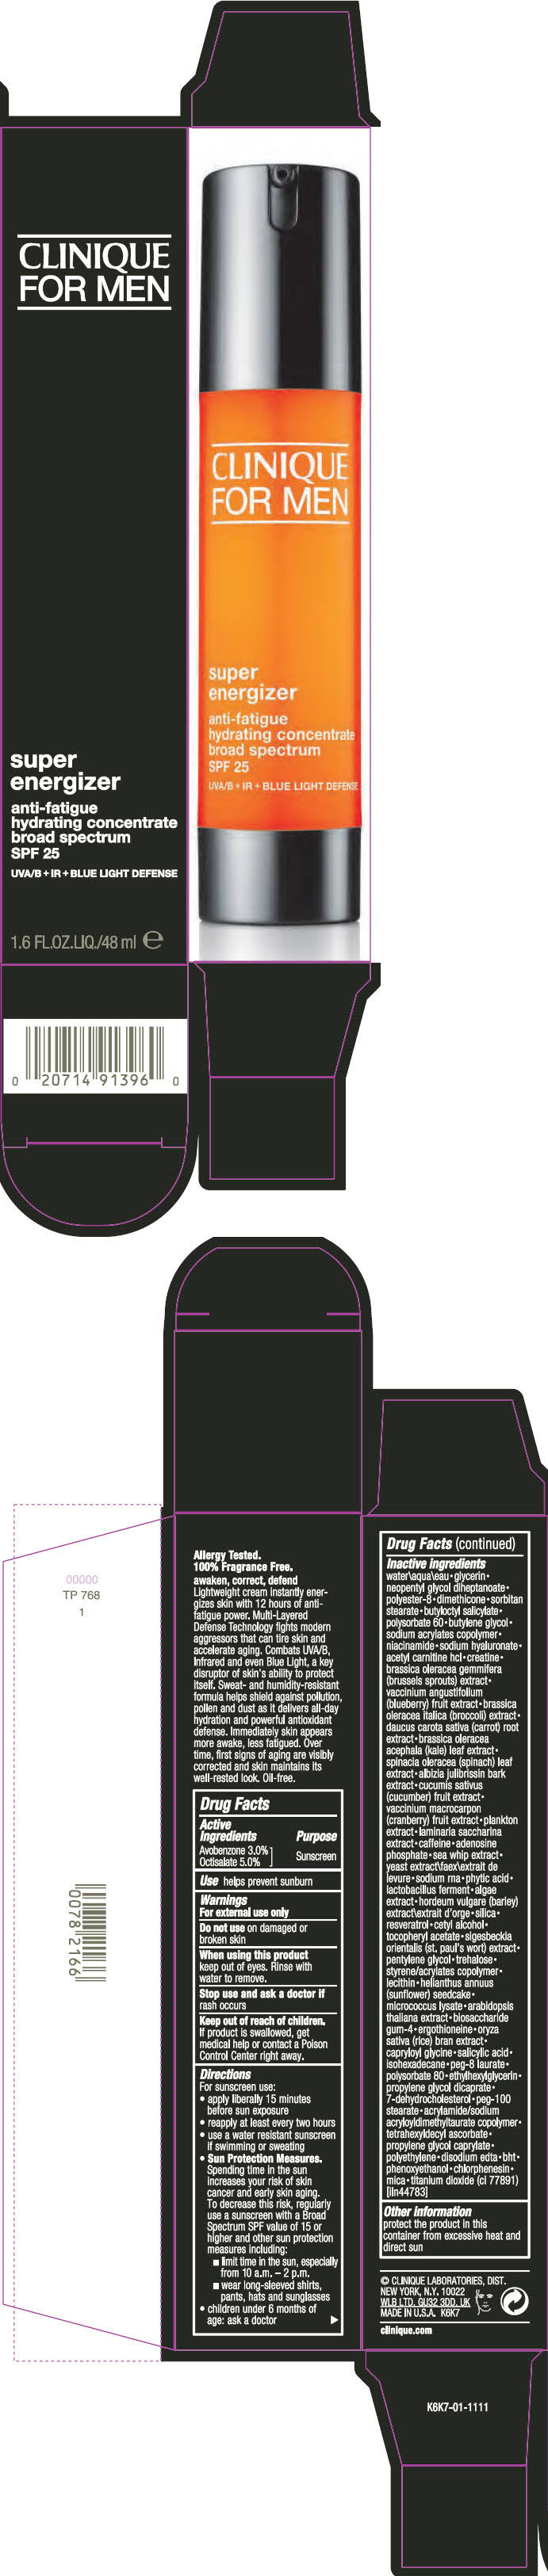 PRINCIPAL DISPLAY PANEL - 48 ml Bottle Carton